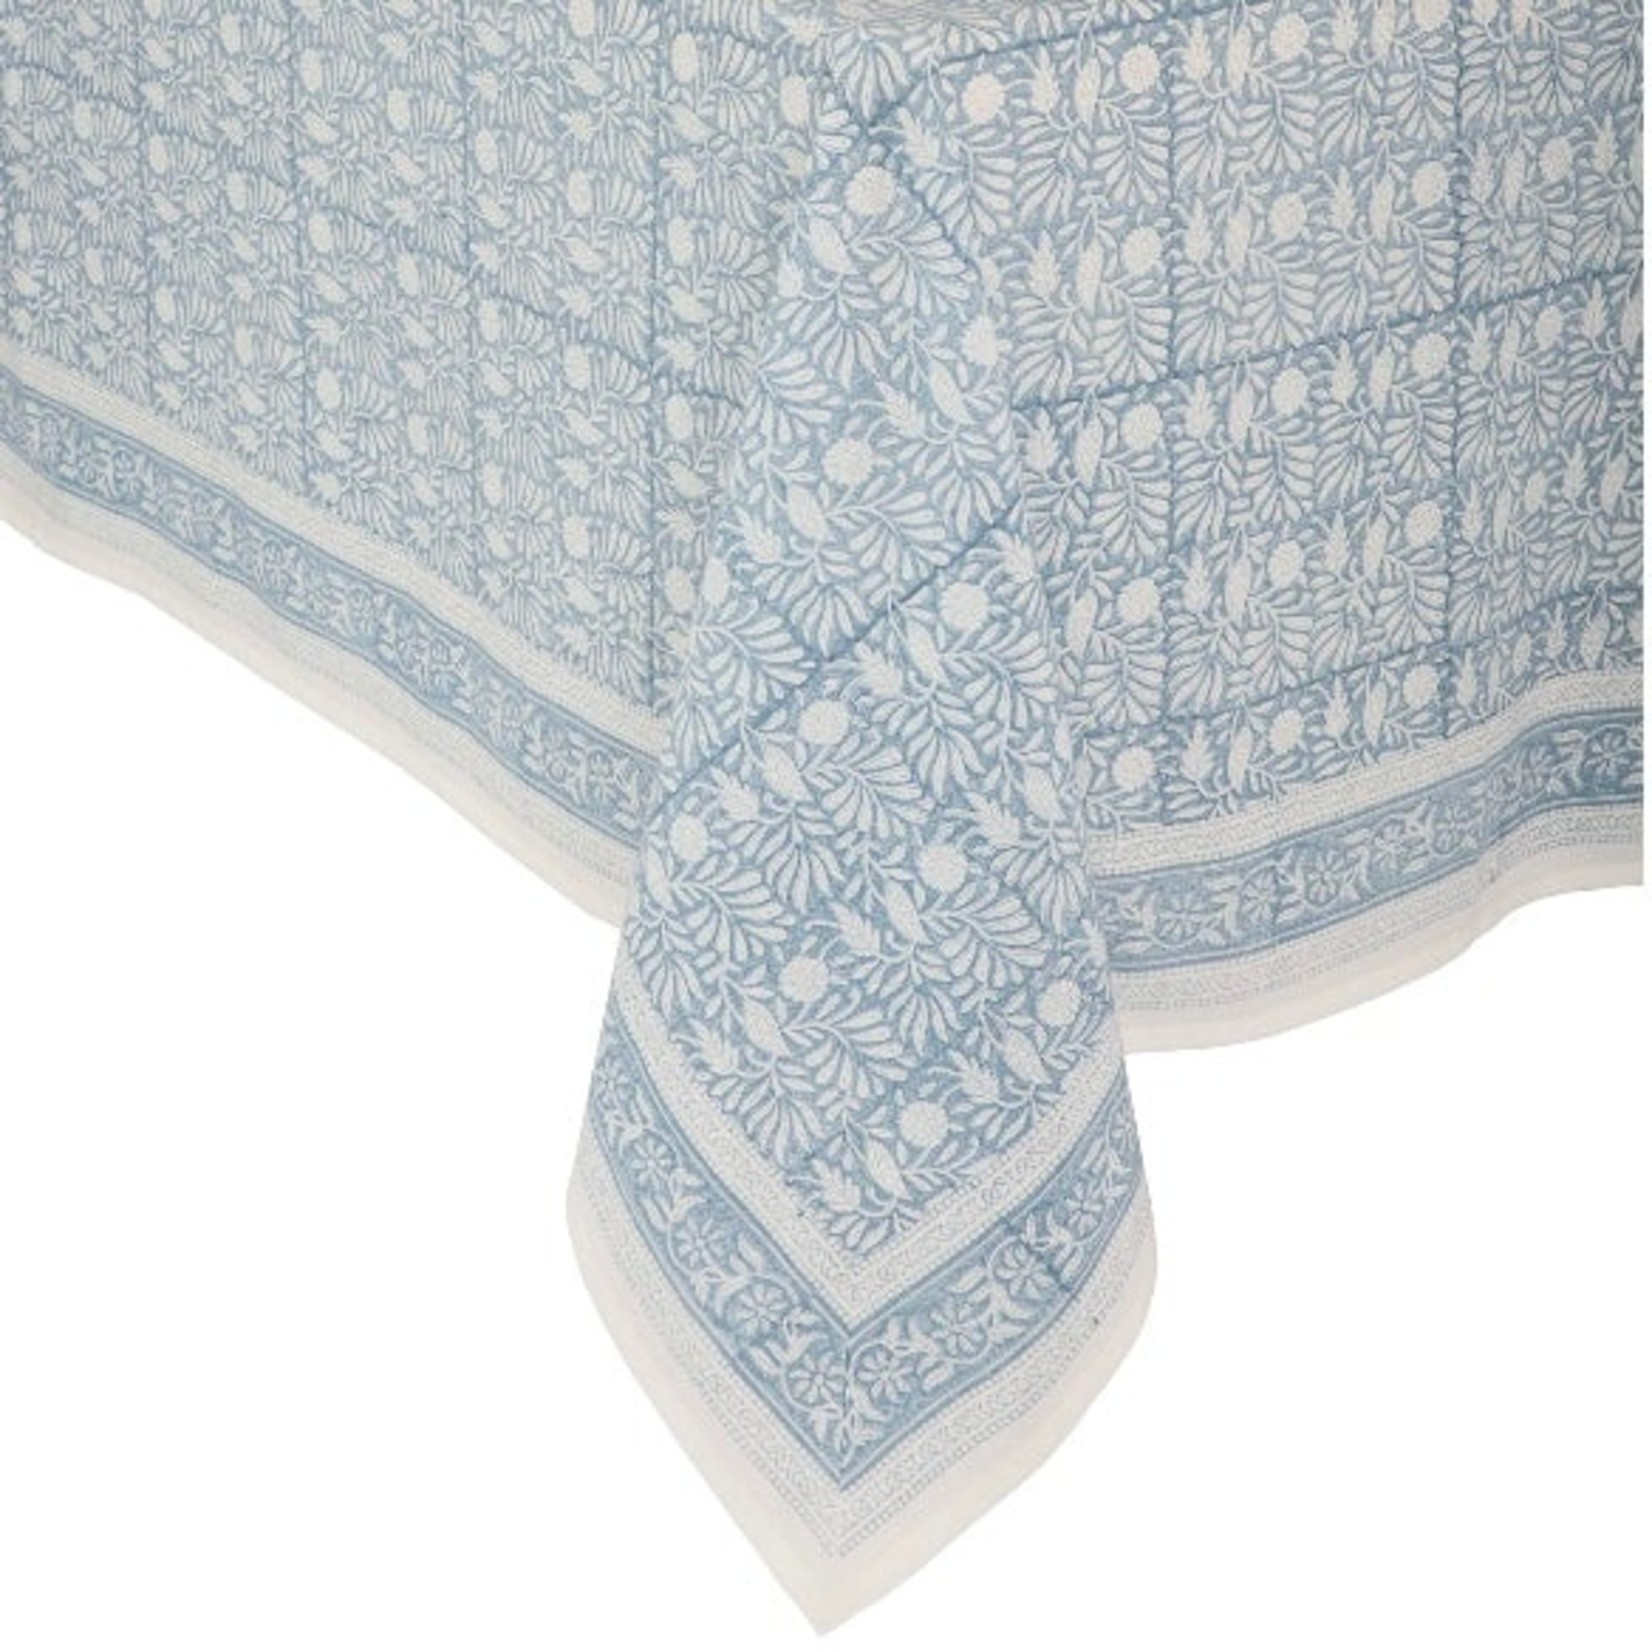 Amanda Lindroth Hand-Blocked Jasmine Tablecloths